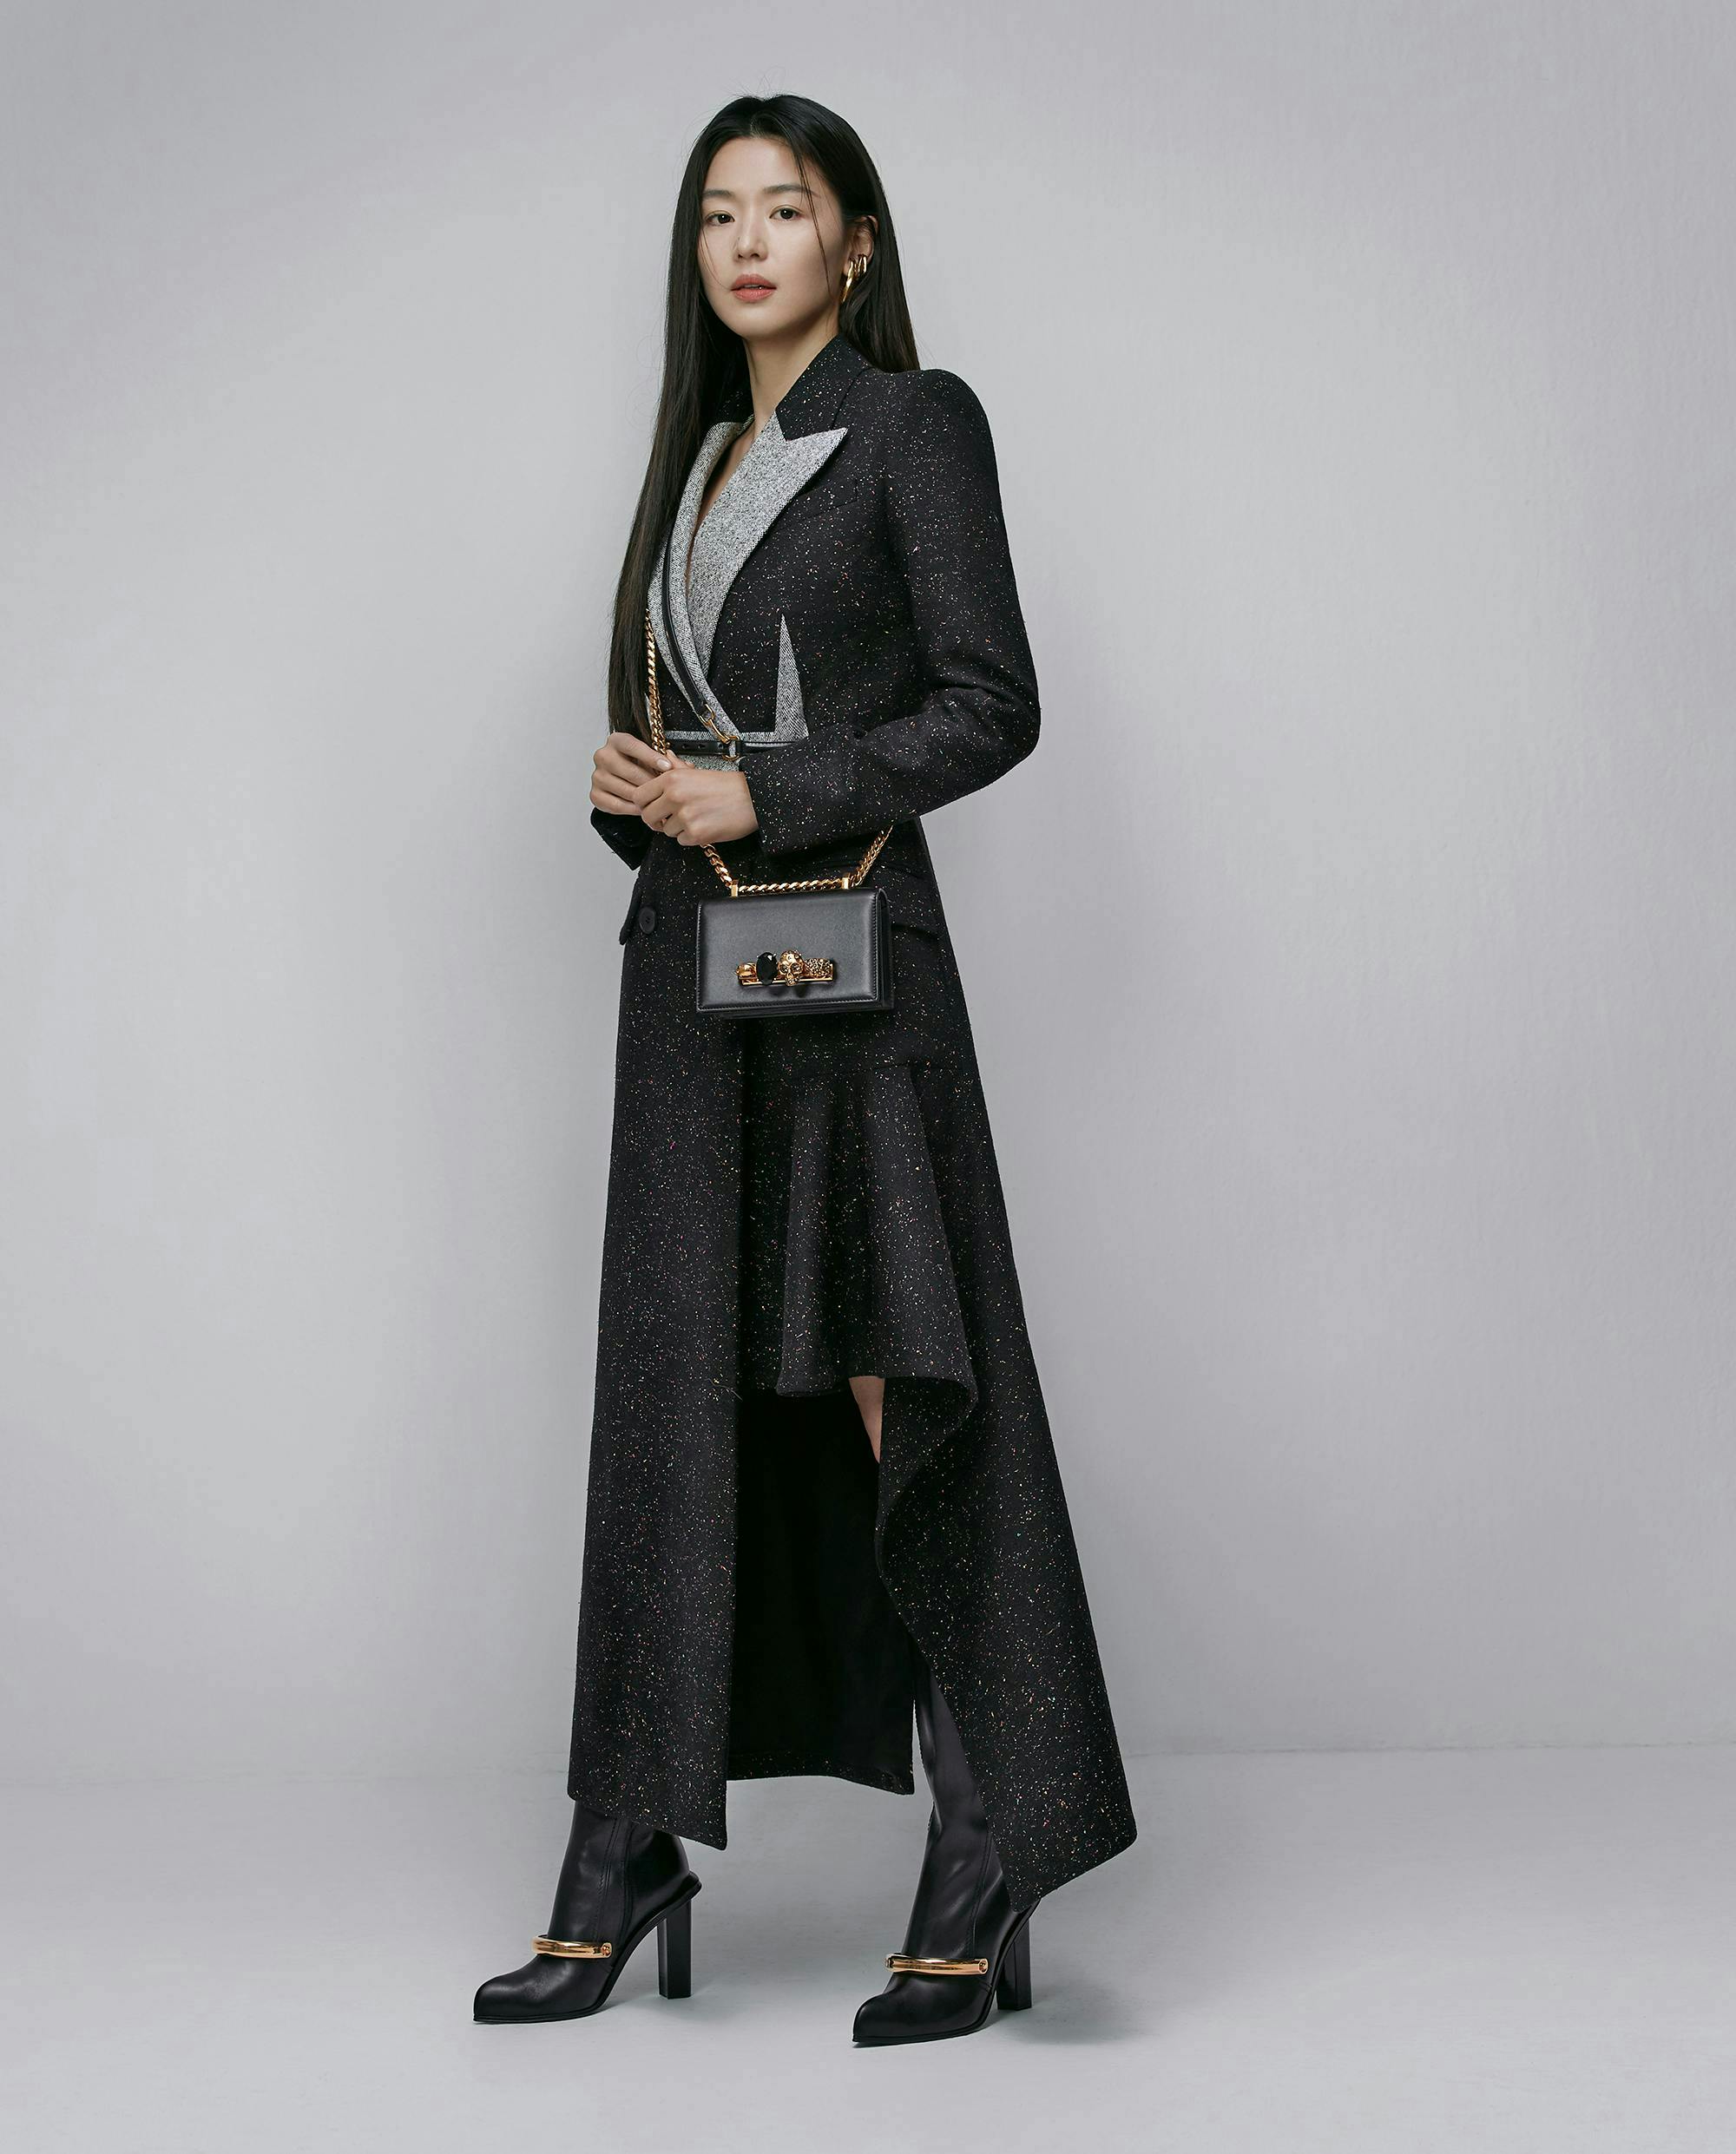 clothing apparel sleeve overcoat coat dress long sleeve person human female